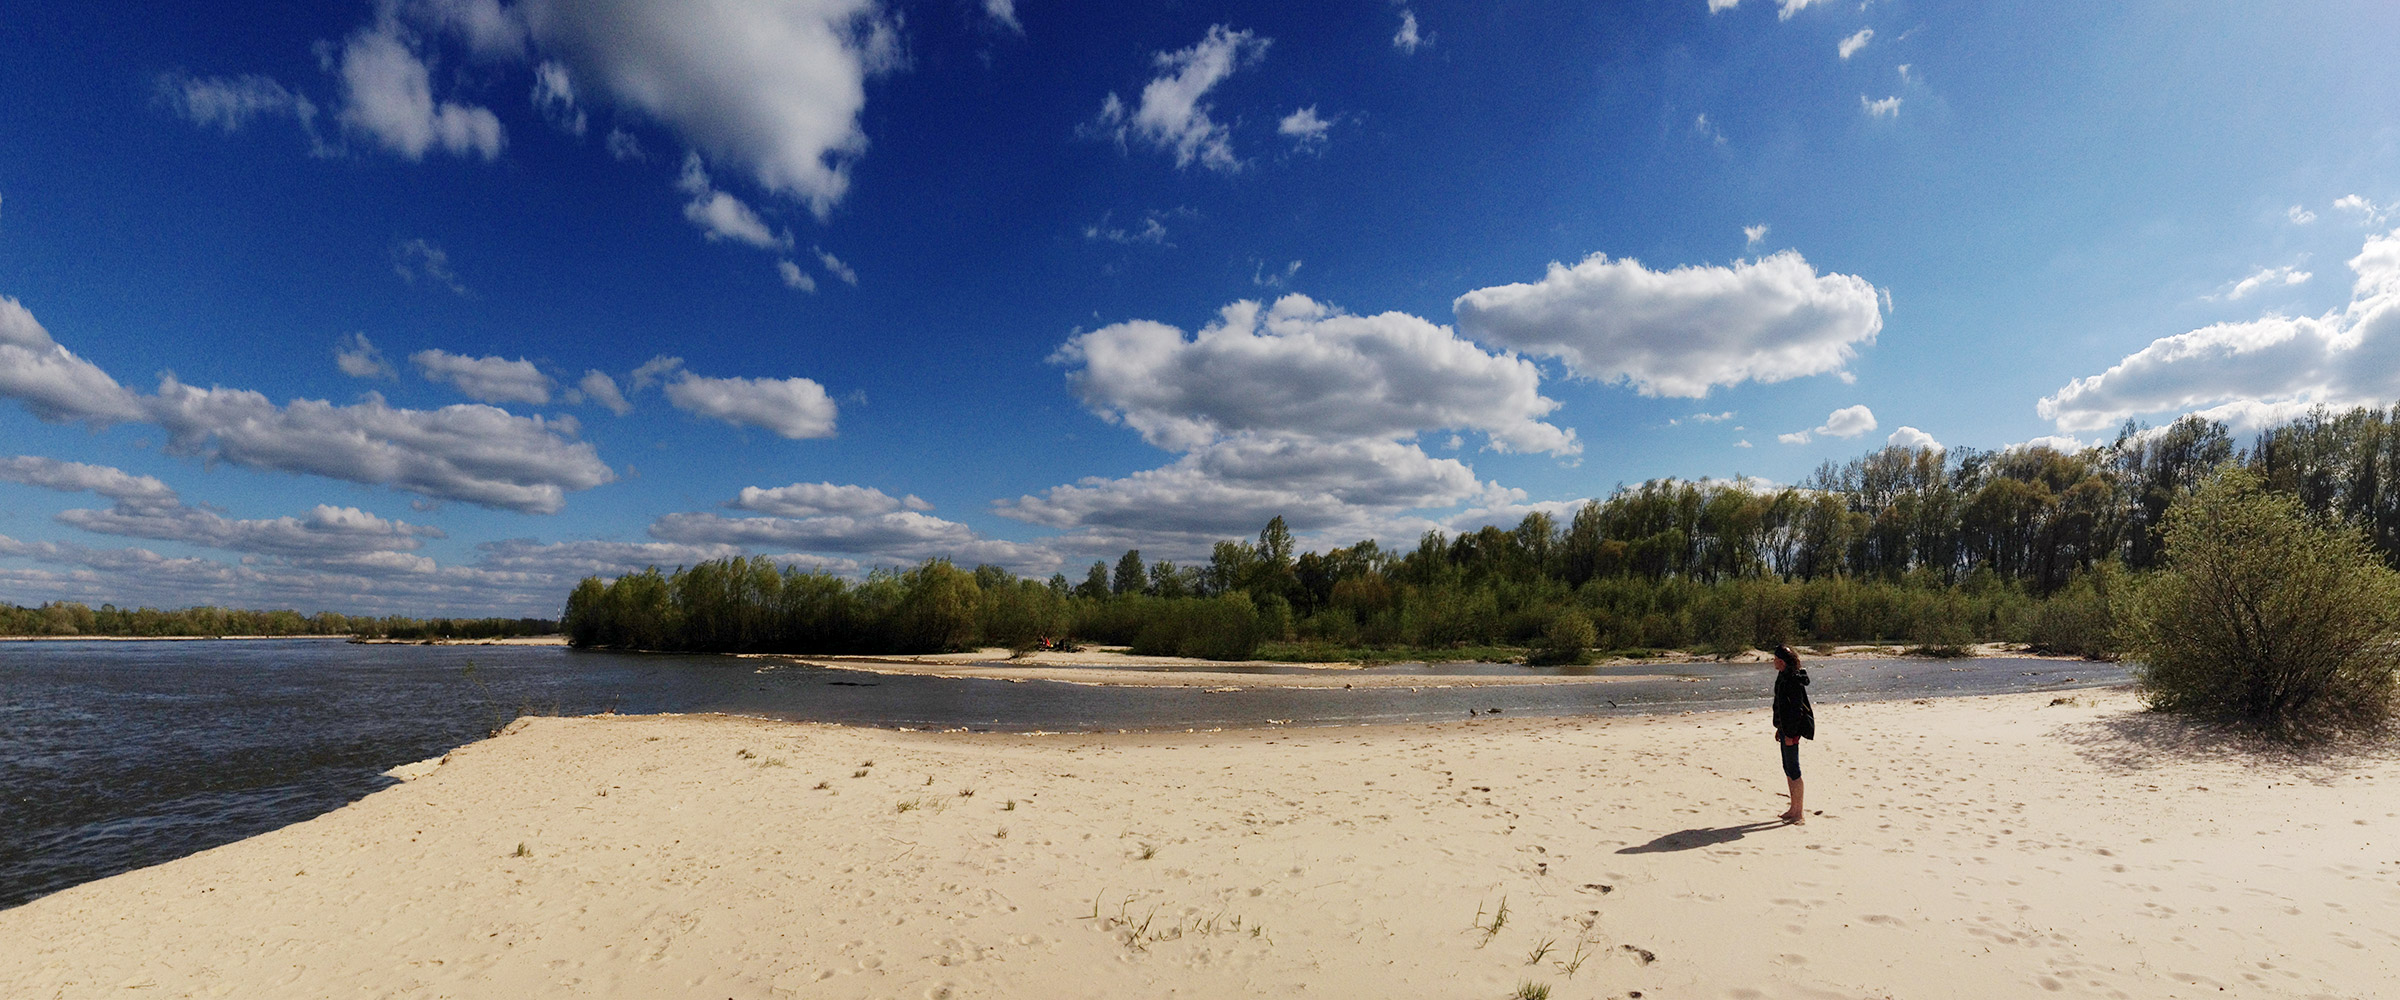 PANORAMA DIARY | Iphoneography blog | Vistula River near Gassy, Poland